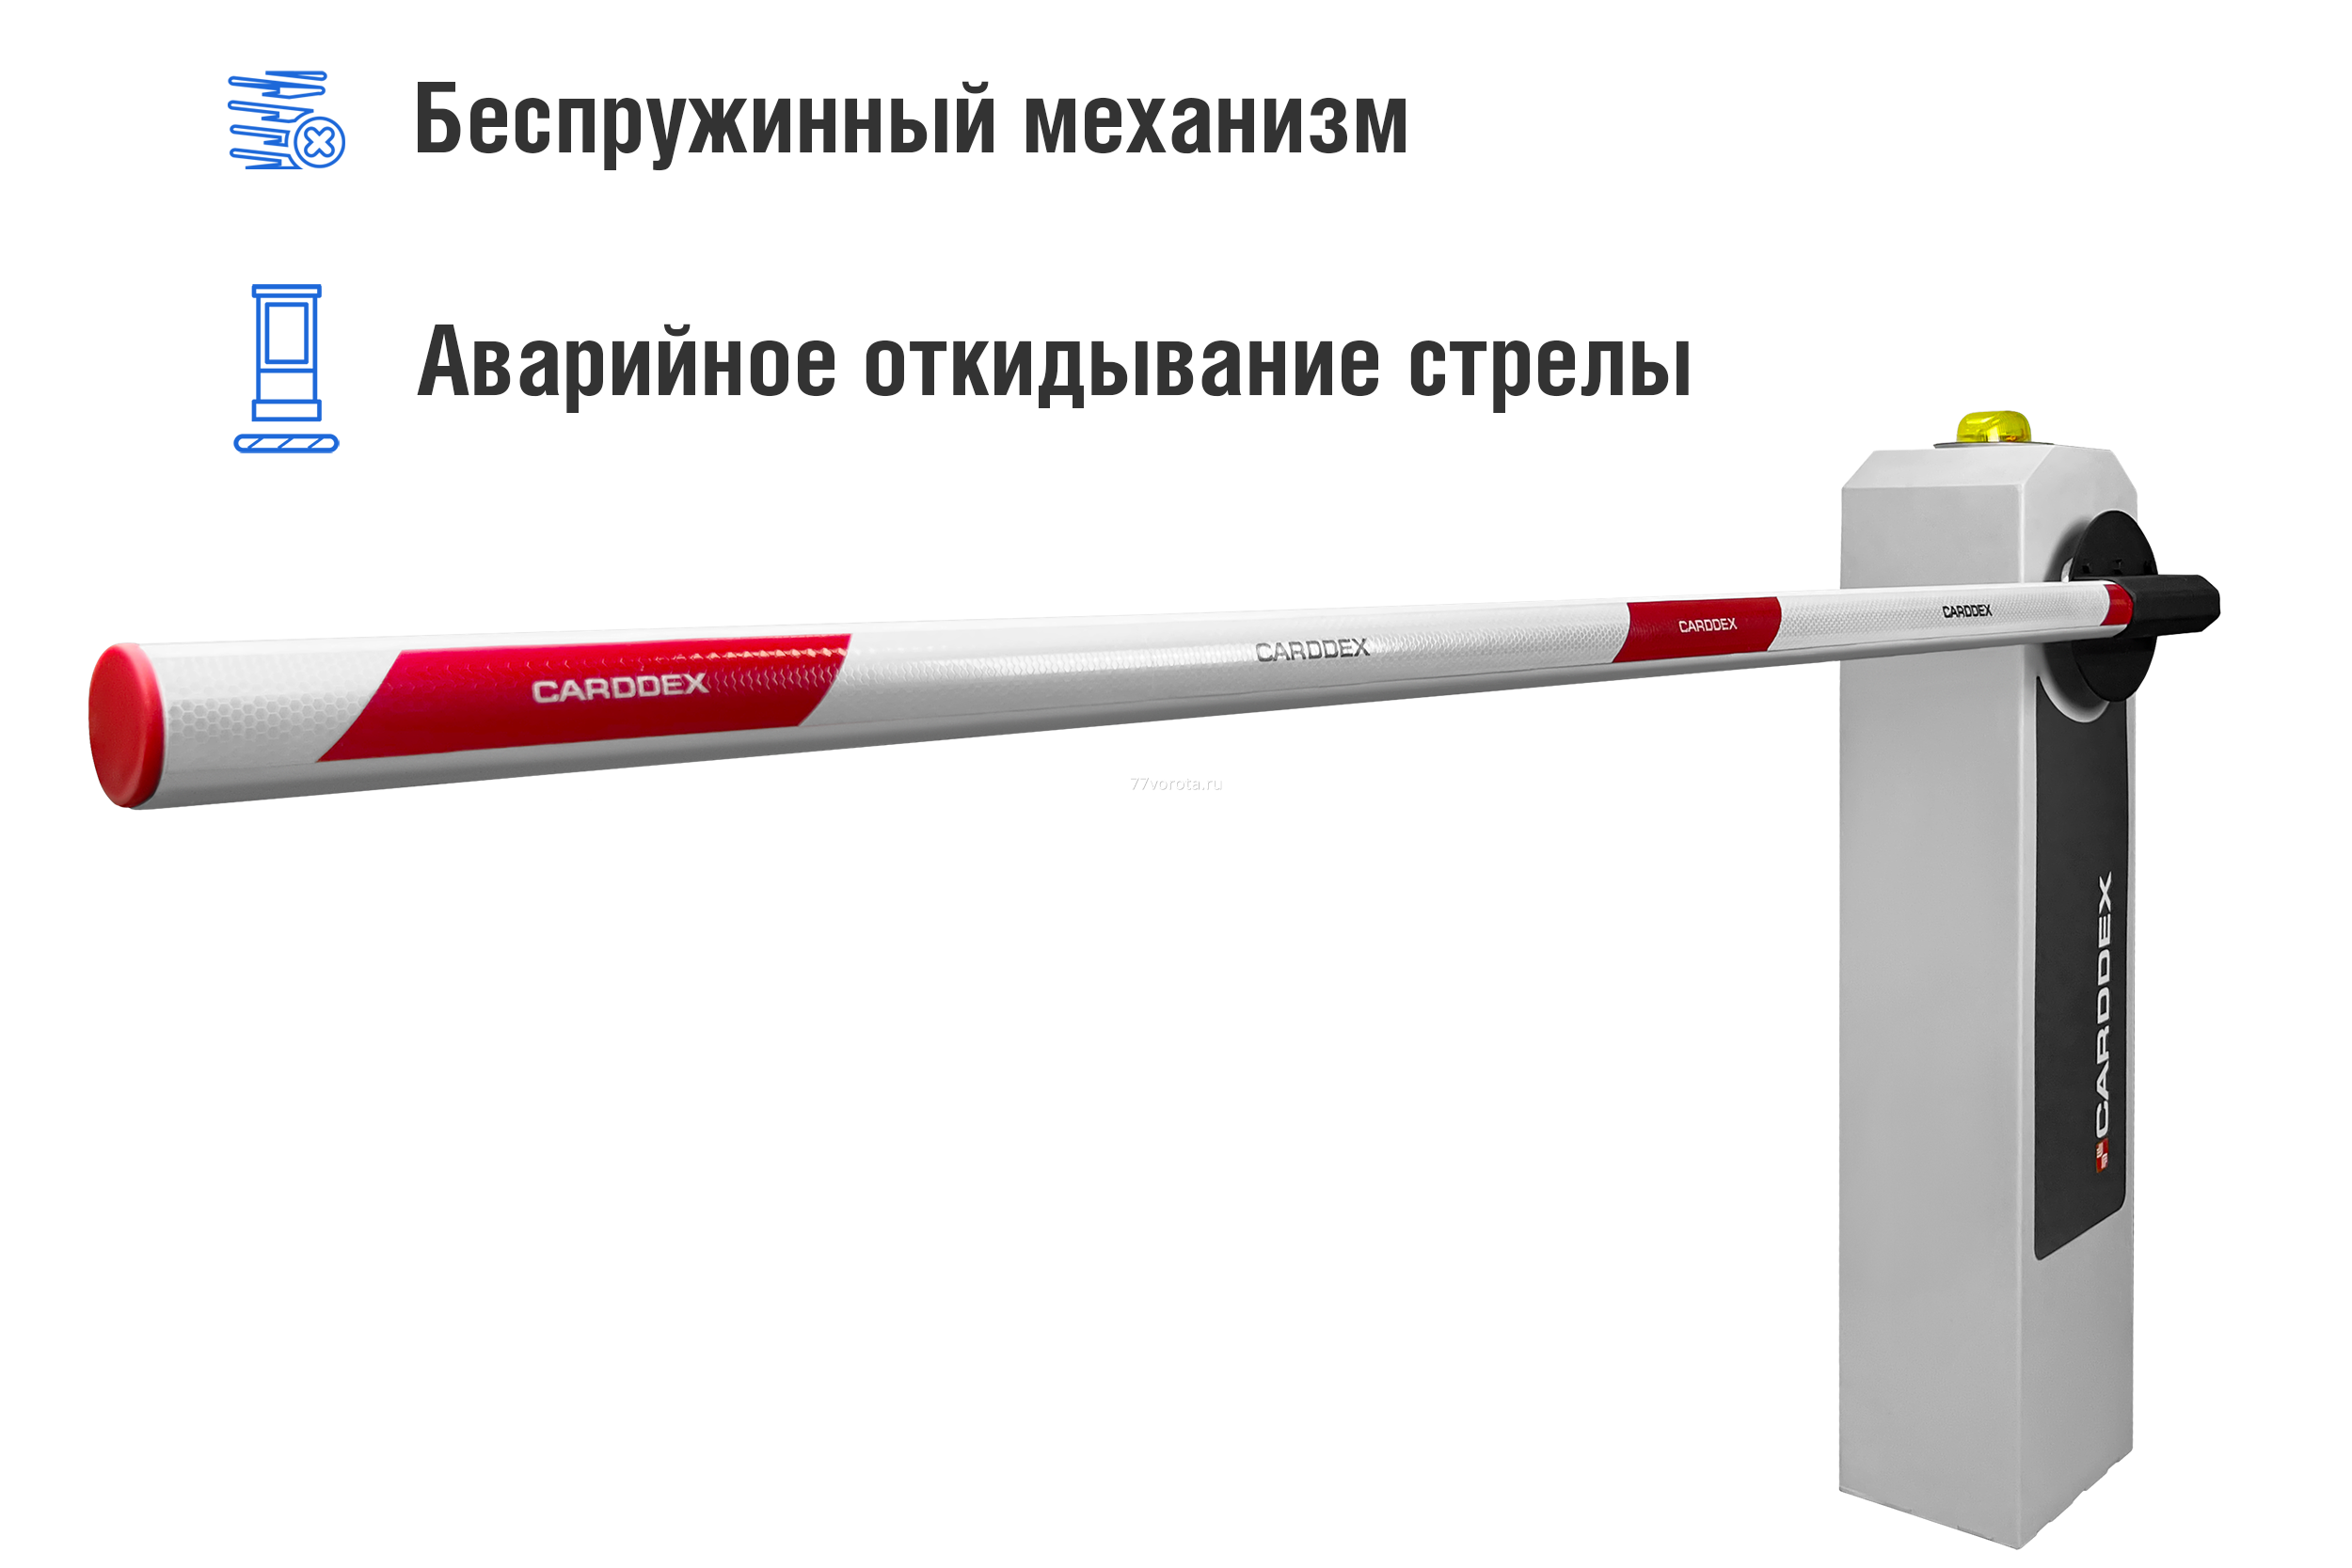 Автоматический шлагбаум CARDDEX «RBM-L», комплект «Стандарт-L» - фото 1